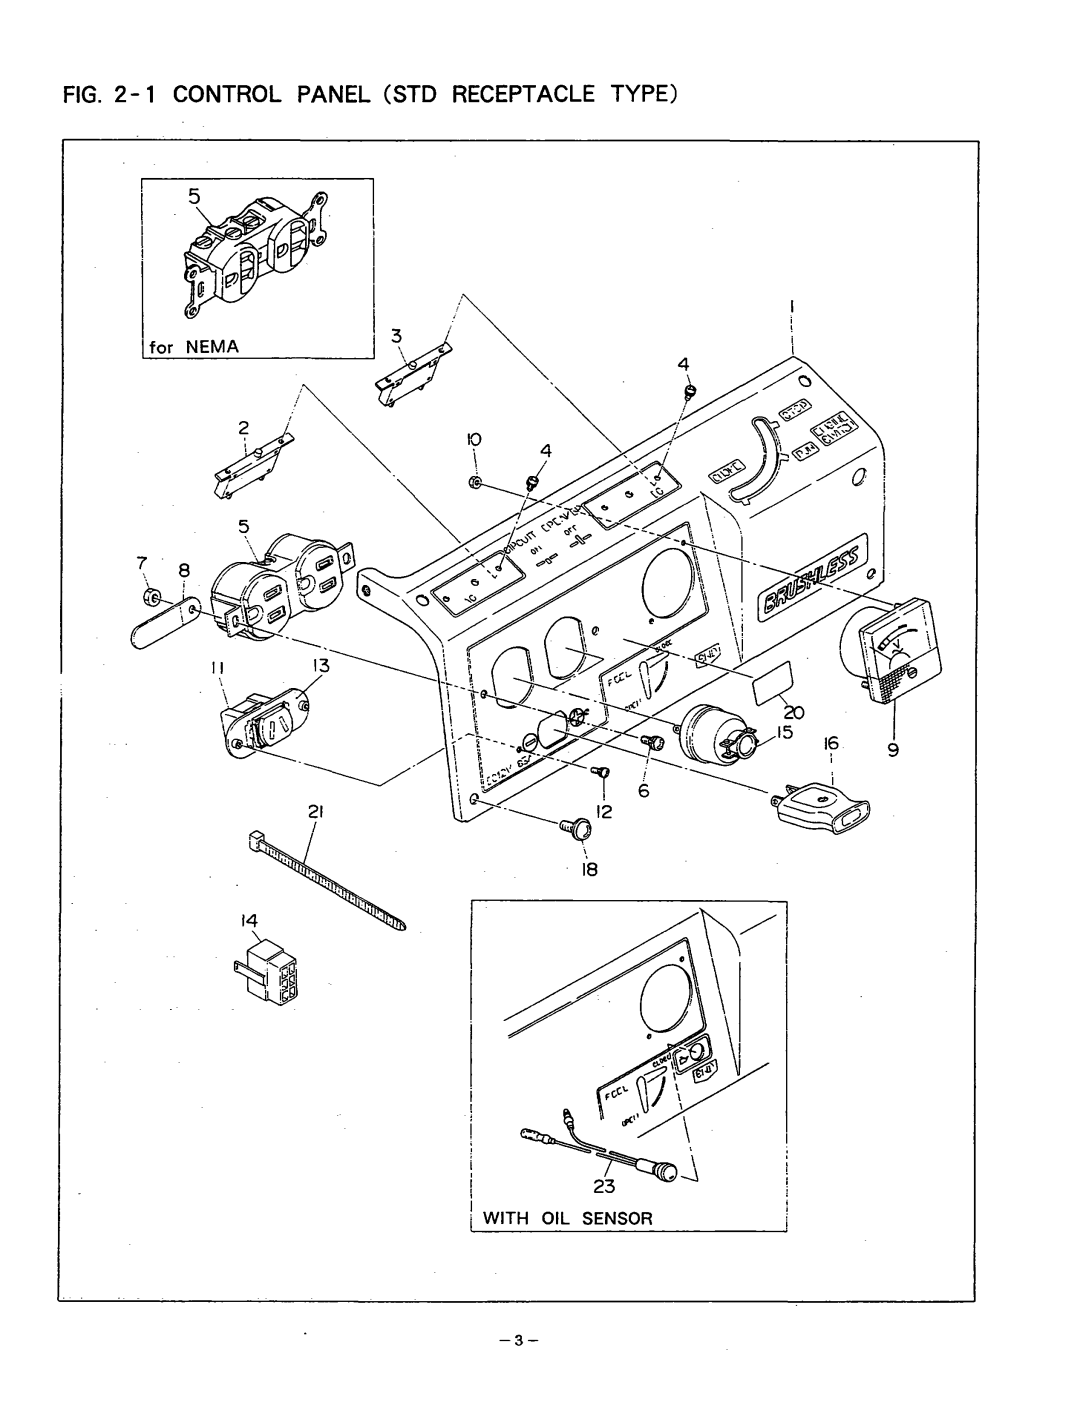 Subaru Robin Power Products R1210 manual 1 CONTROLPANELSTD RECEPTACLE TYPE, With Oil Sensor 